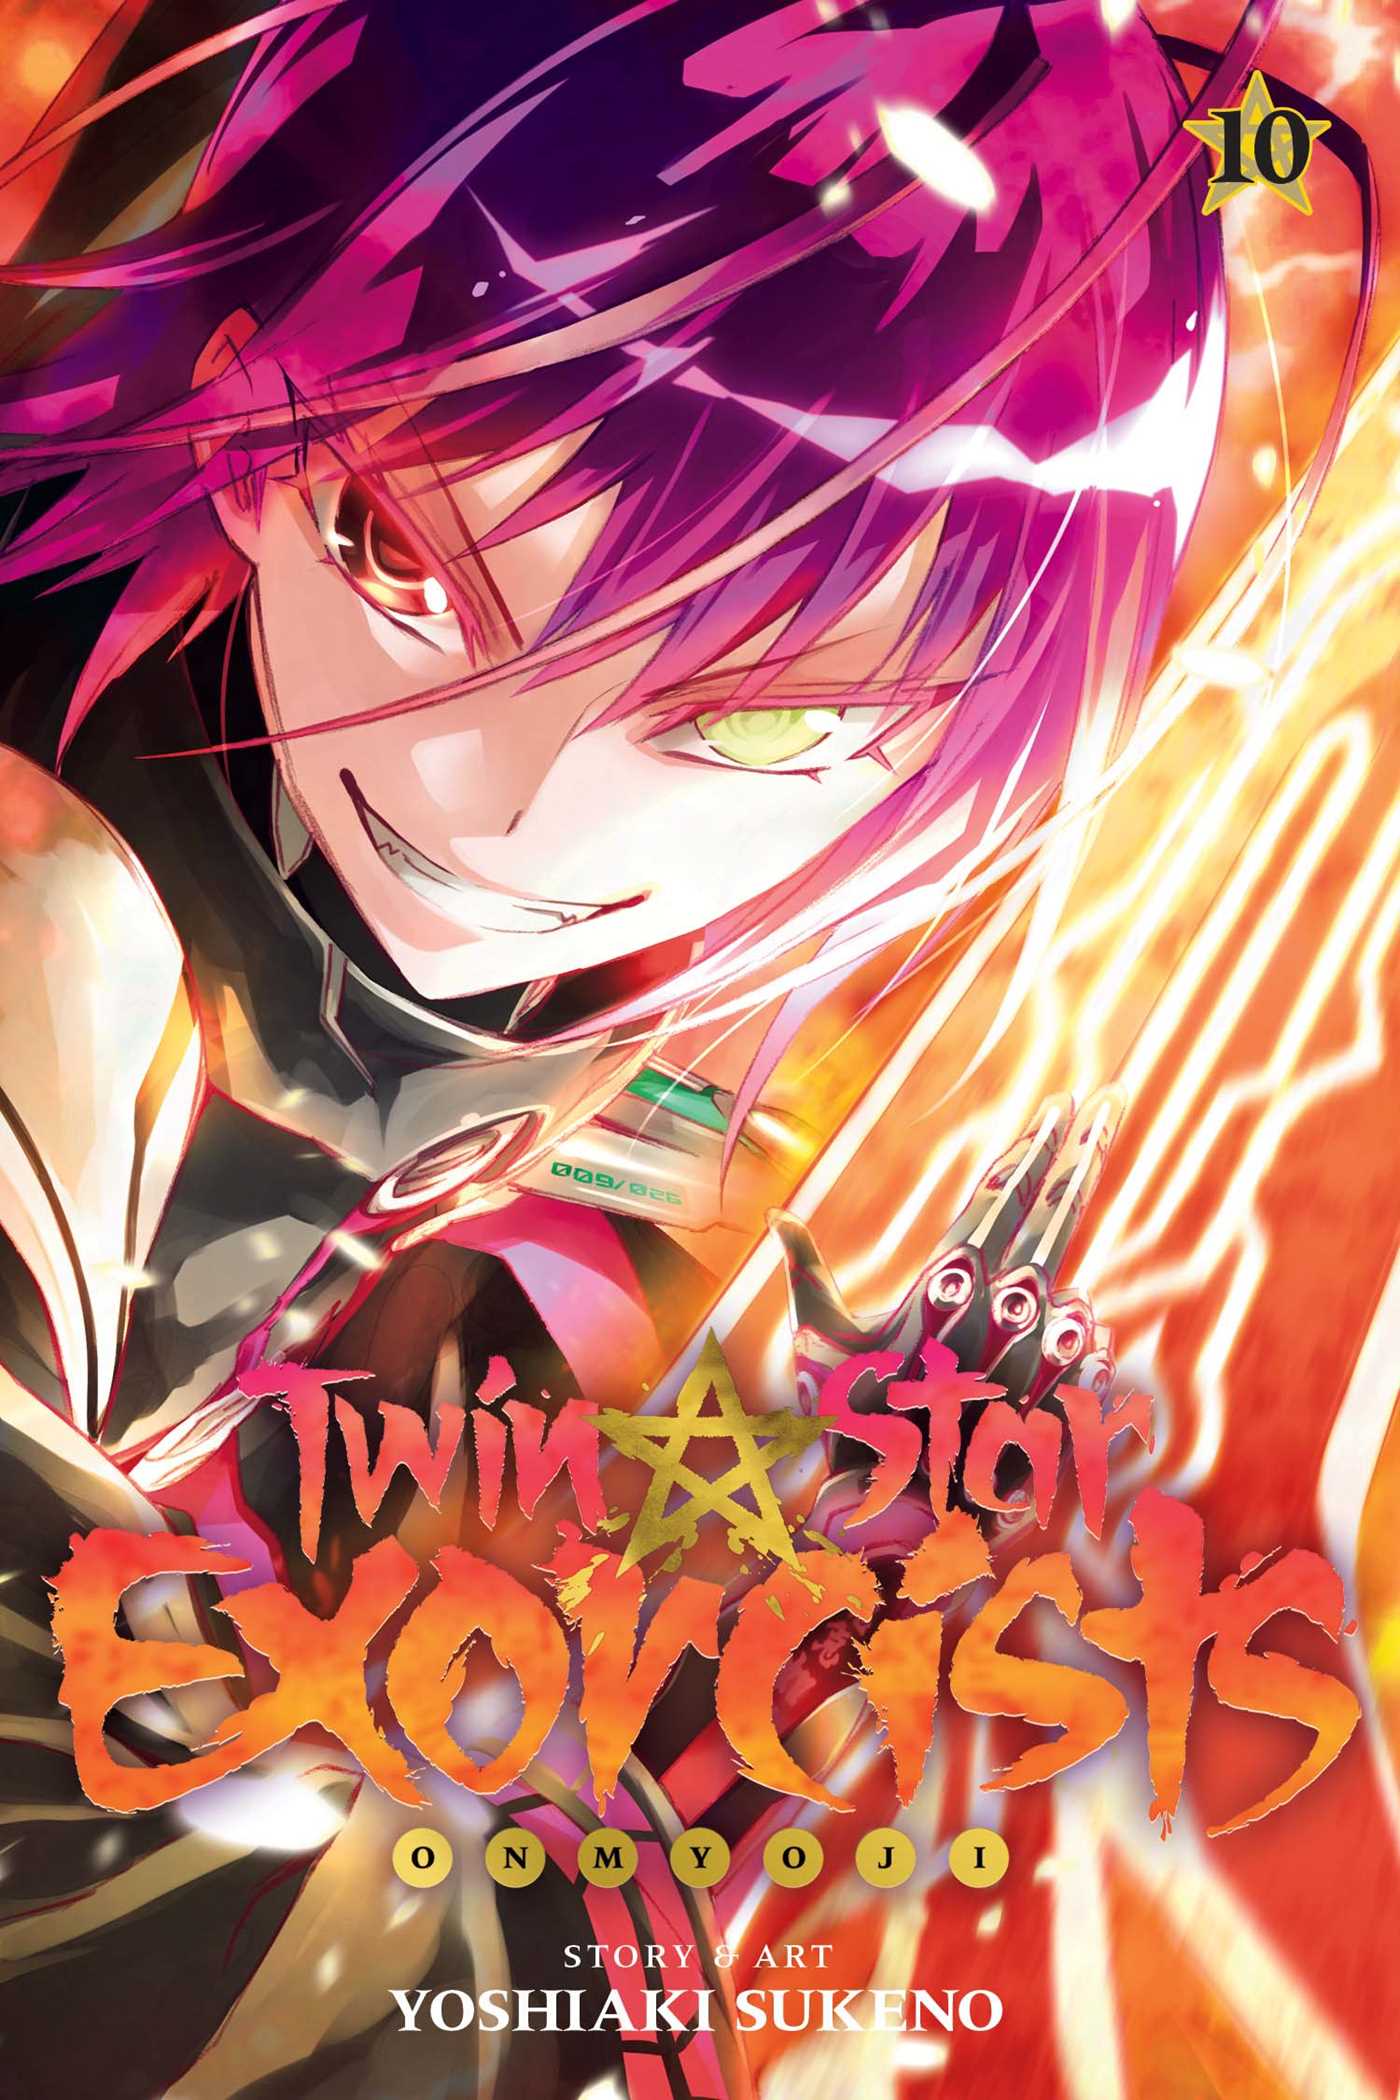 Manga Twin Star Exorcists